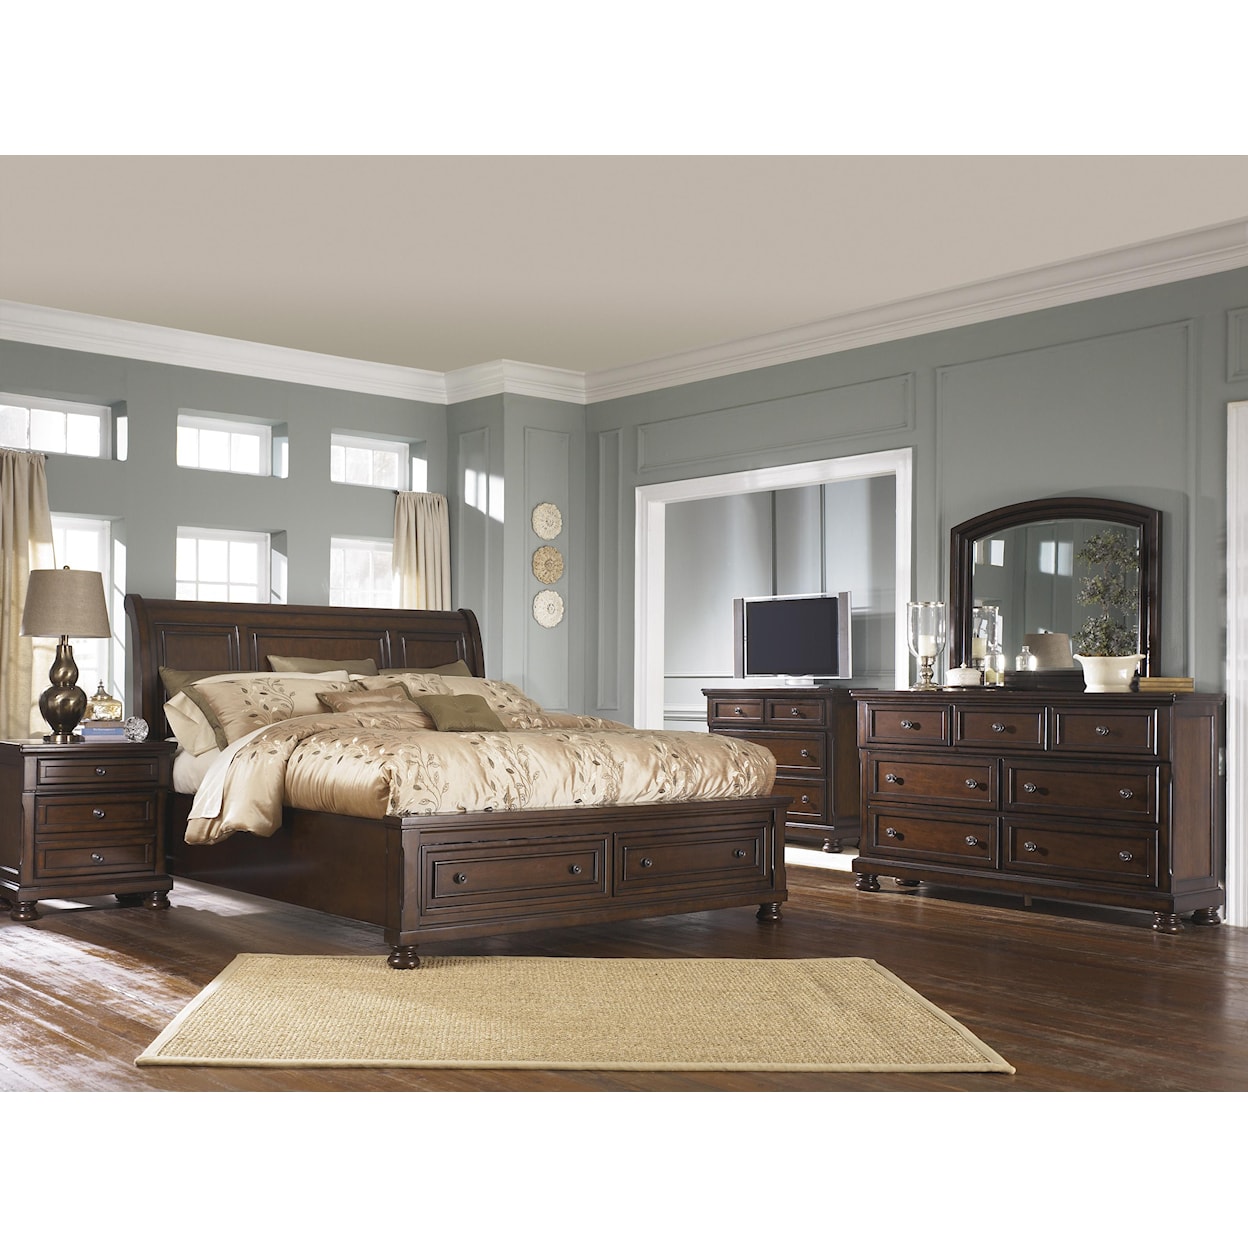 Ashley Furniture Porter Queen Bedroom Group